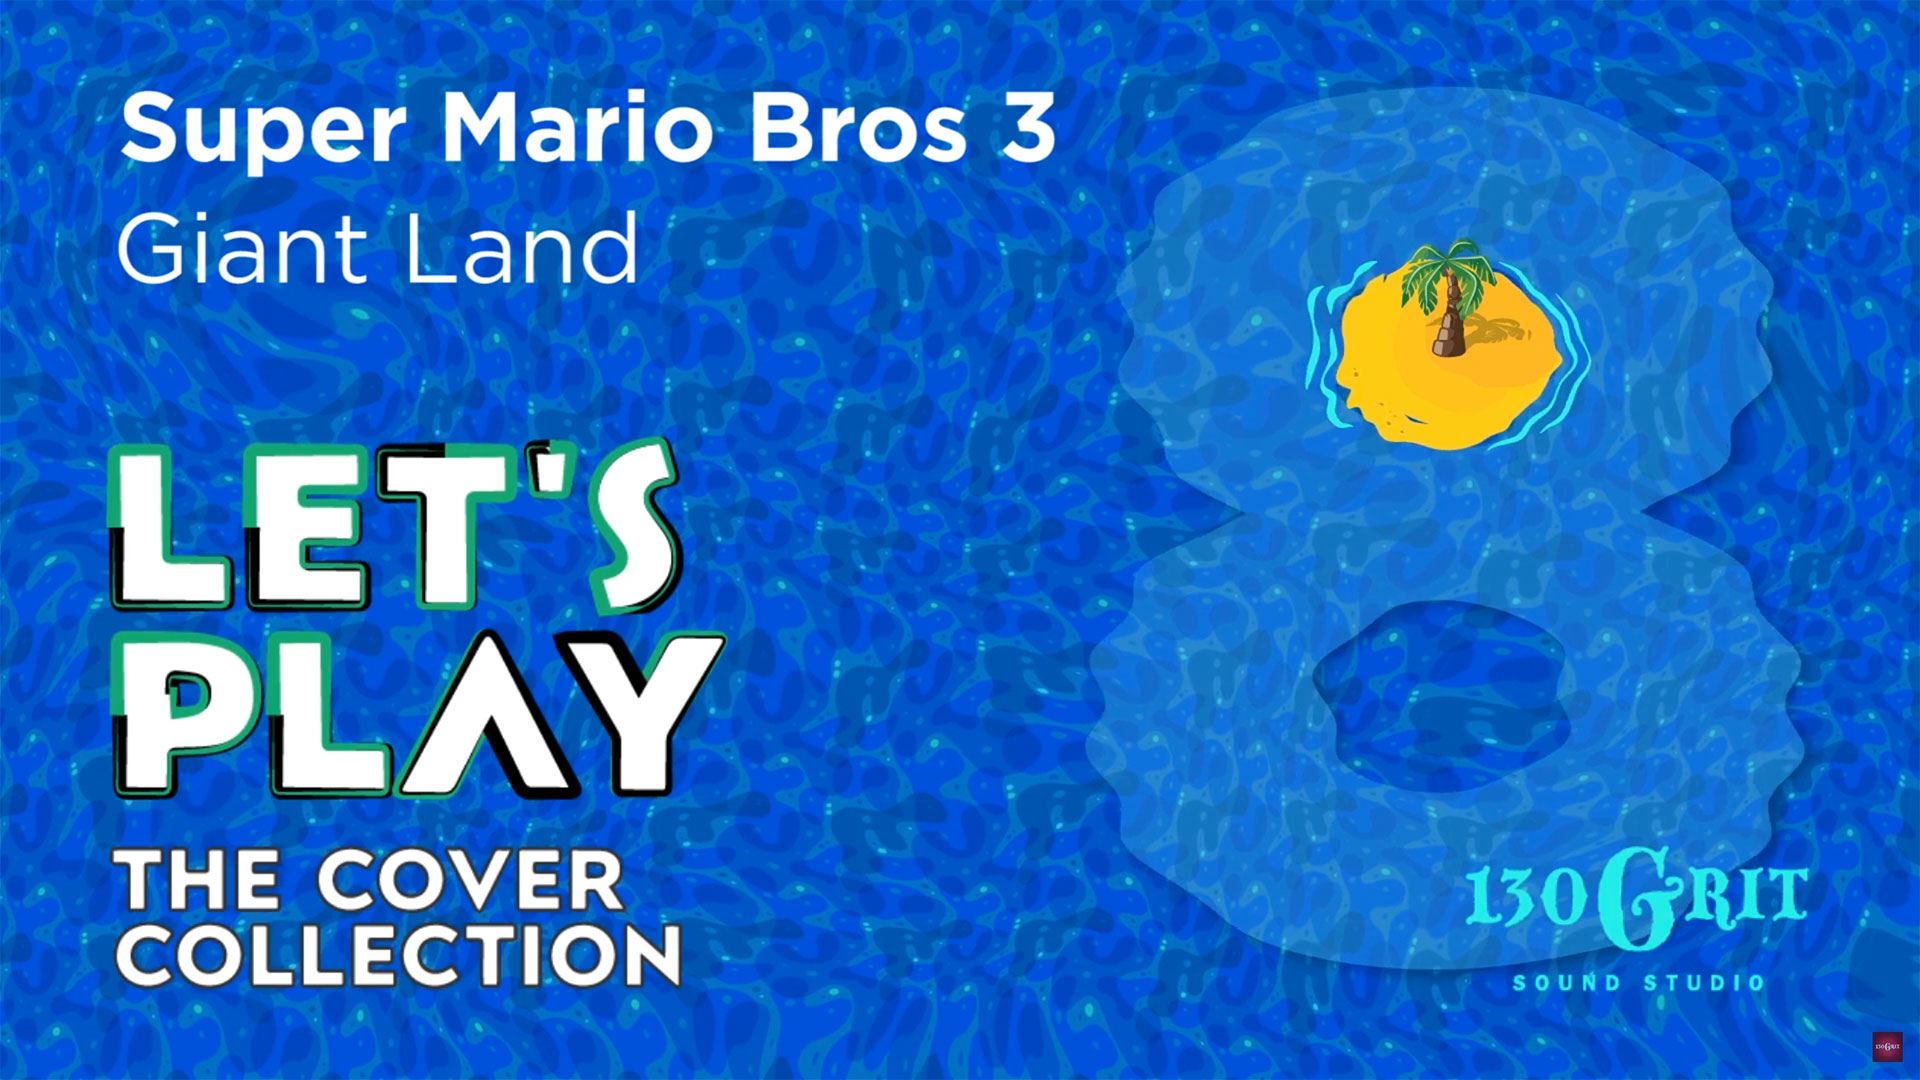 Super Mario Bros 3 – Giant Land (Jazz/Funk Cover)